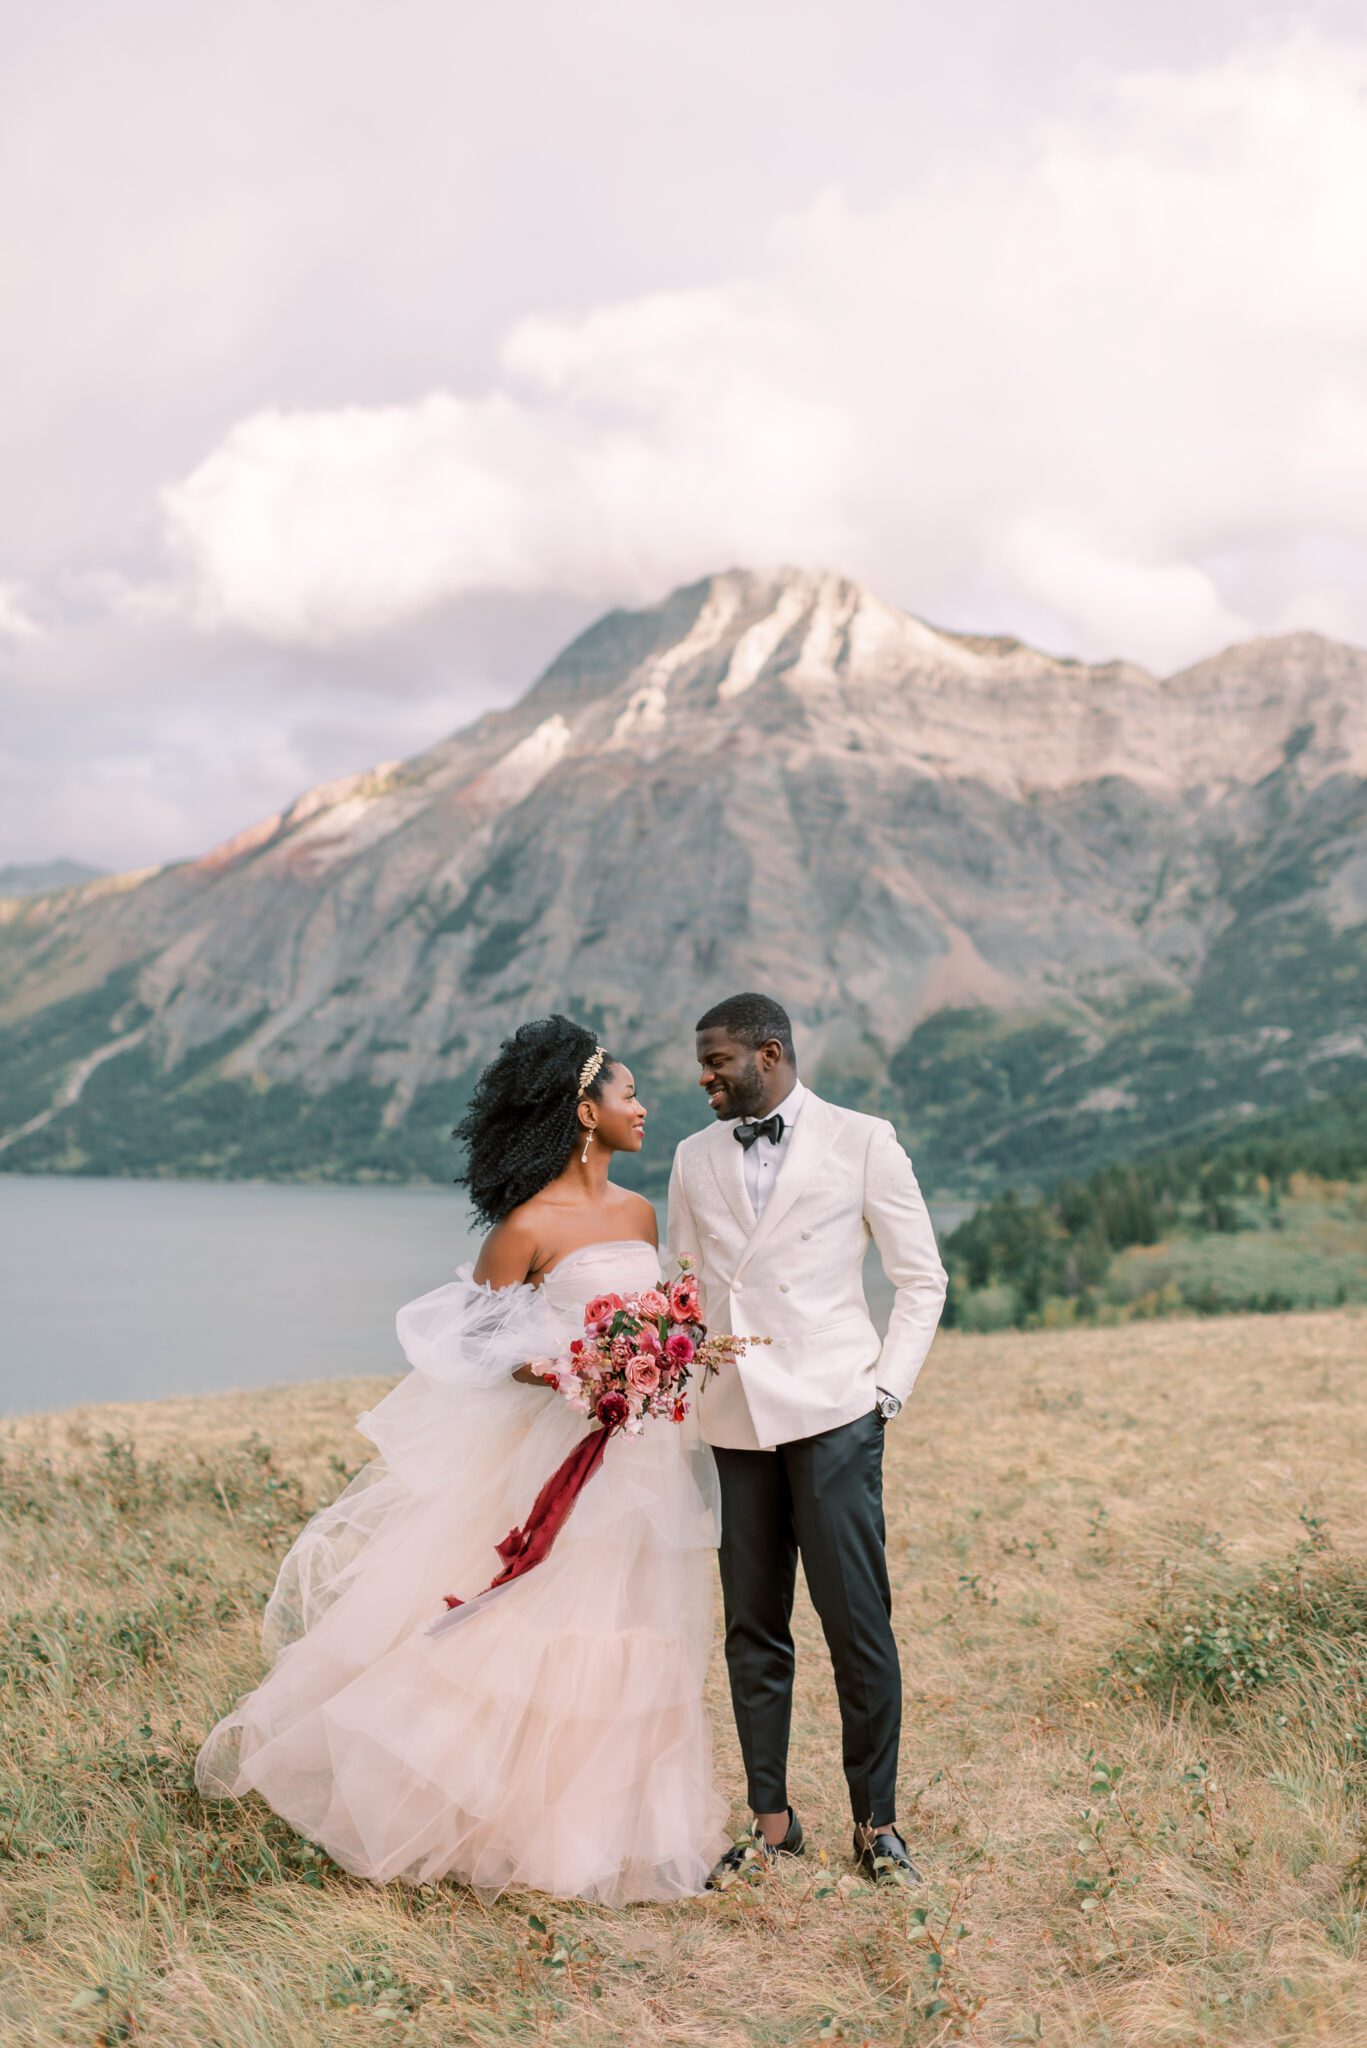 Intimate Elopement in Waterton Alberta, bride wearing blush wedding dress by Alexandra Victoria Rose, mountain lakeside portrait inspiration